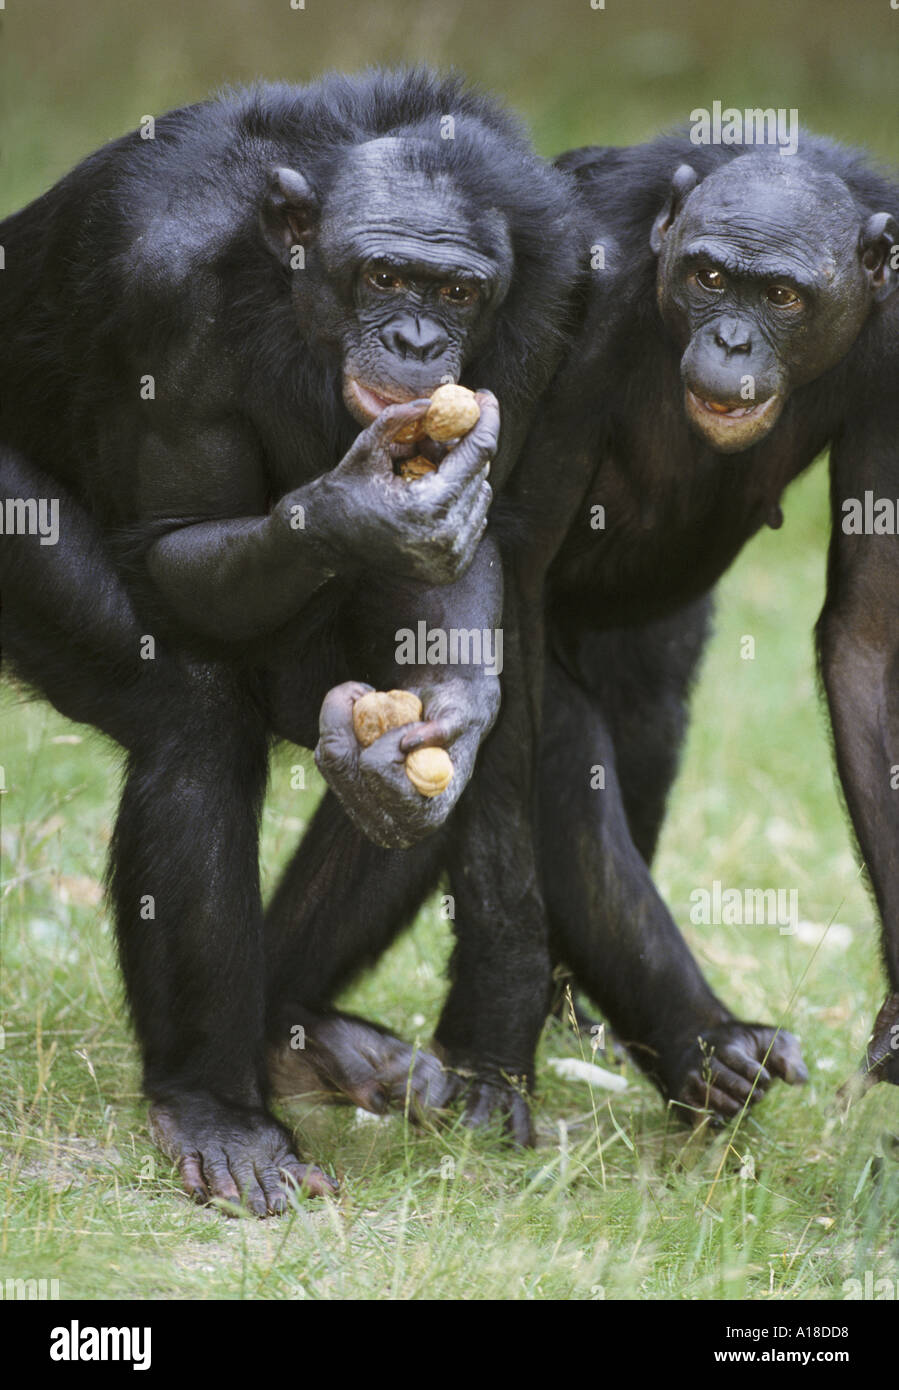 Bonobos with walnuts Stock Photo